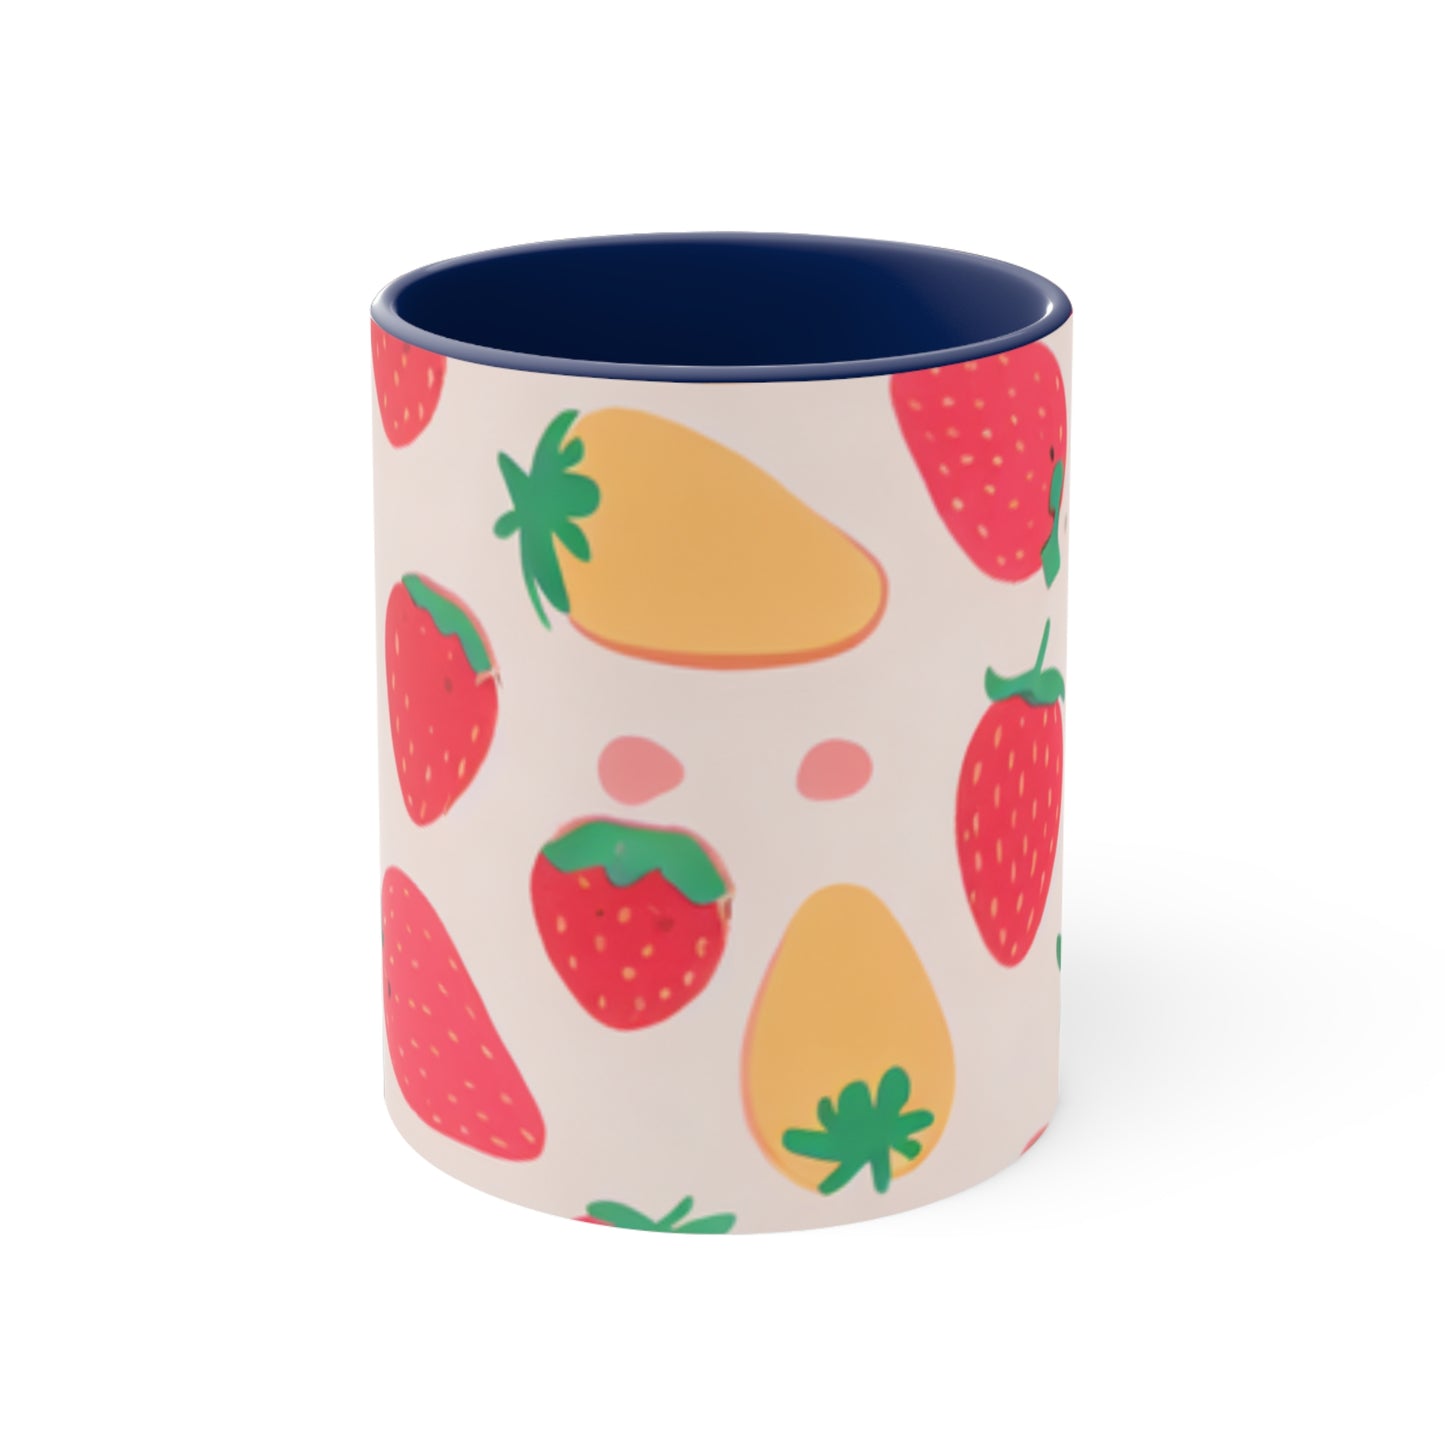 Strawberry and Mango mug